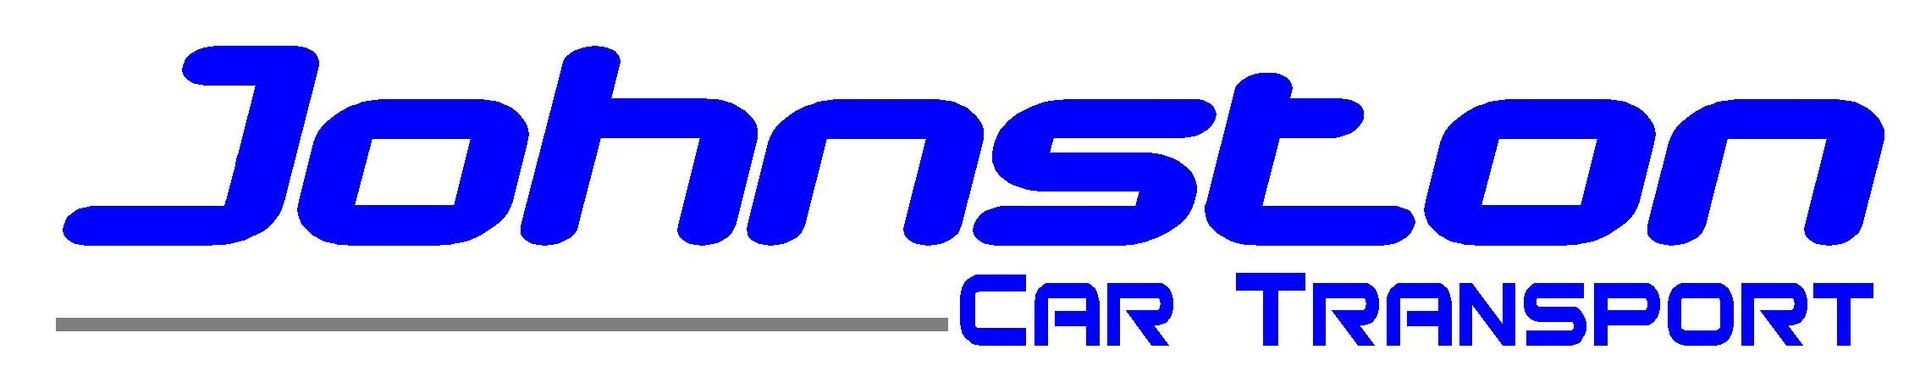 Johnston Car Transport Ltd company logo